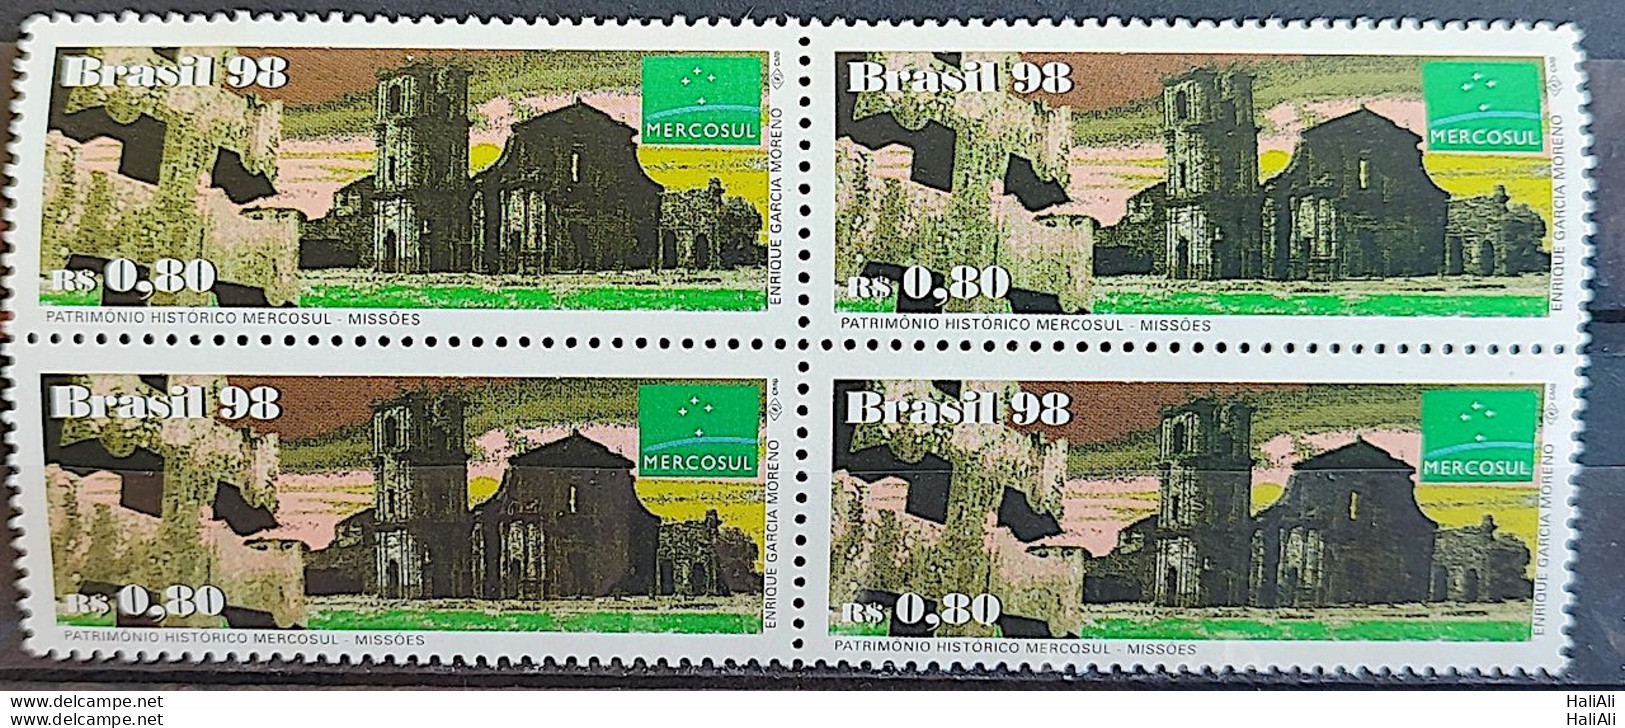 C 2158 Brazil Stamp History Mercosur Misses Church 1998 Block Of 4 - Unused Stamps